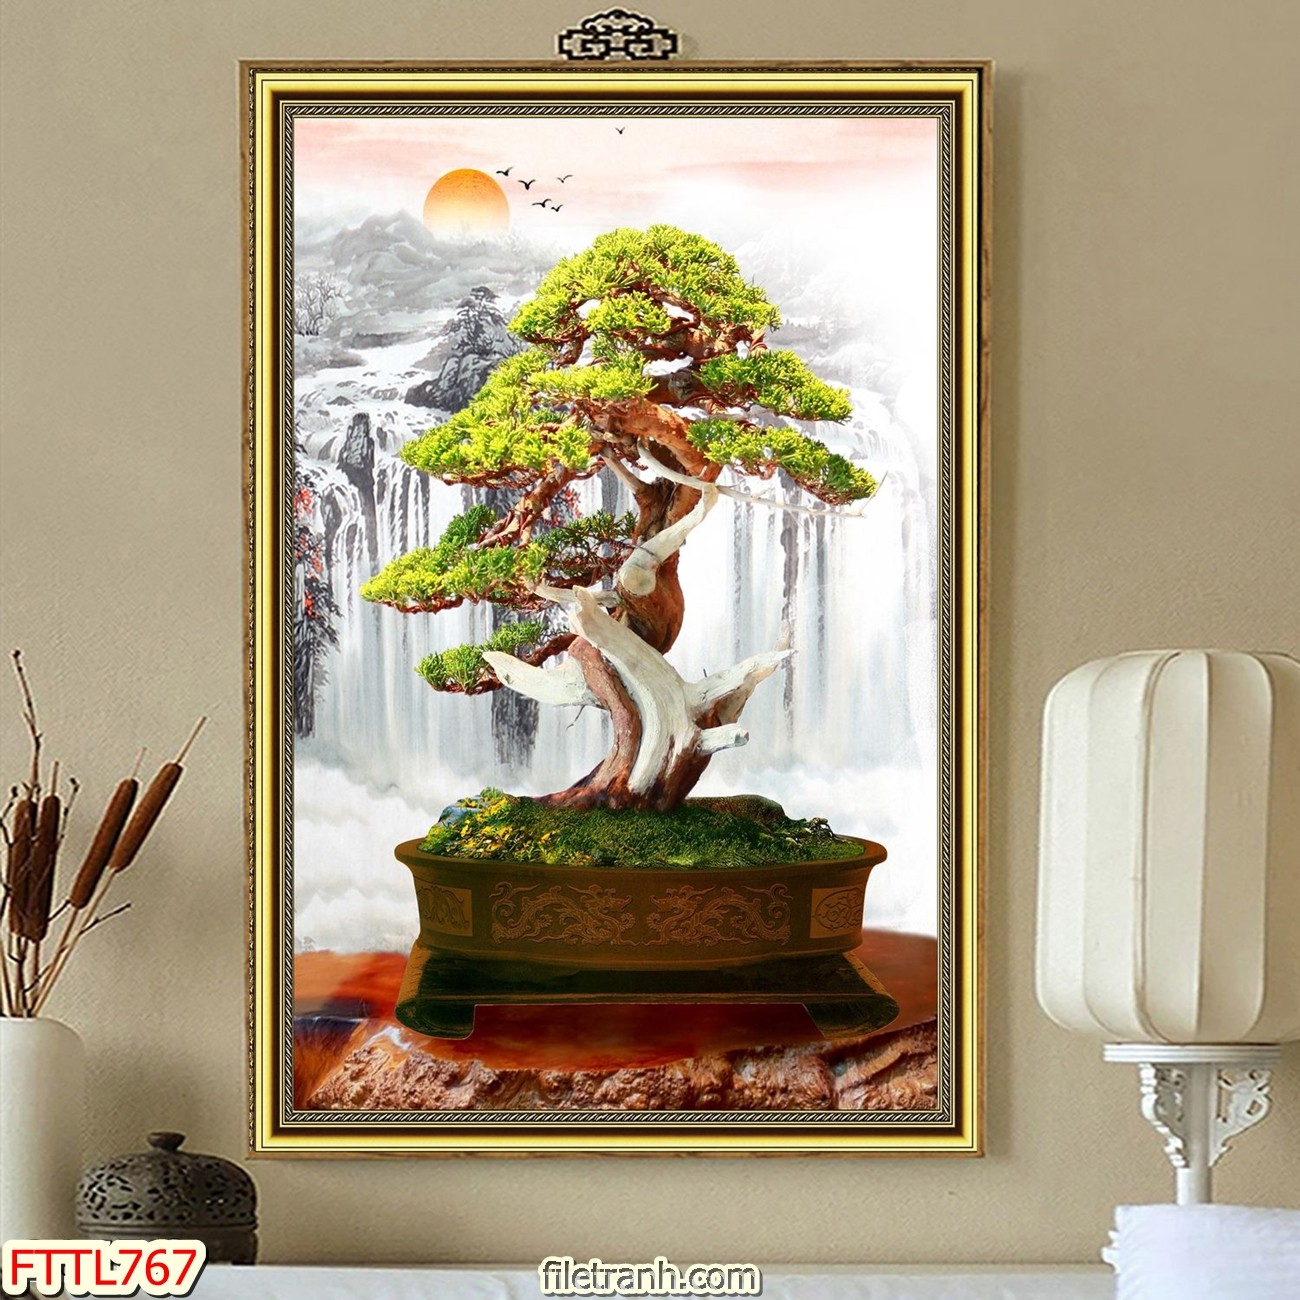 https://filetranh.com/file-tranh-chau-mai-bonsai/file-tranh-chau-mai-bonsai-fttl767.html